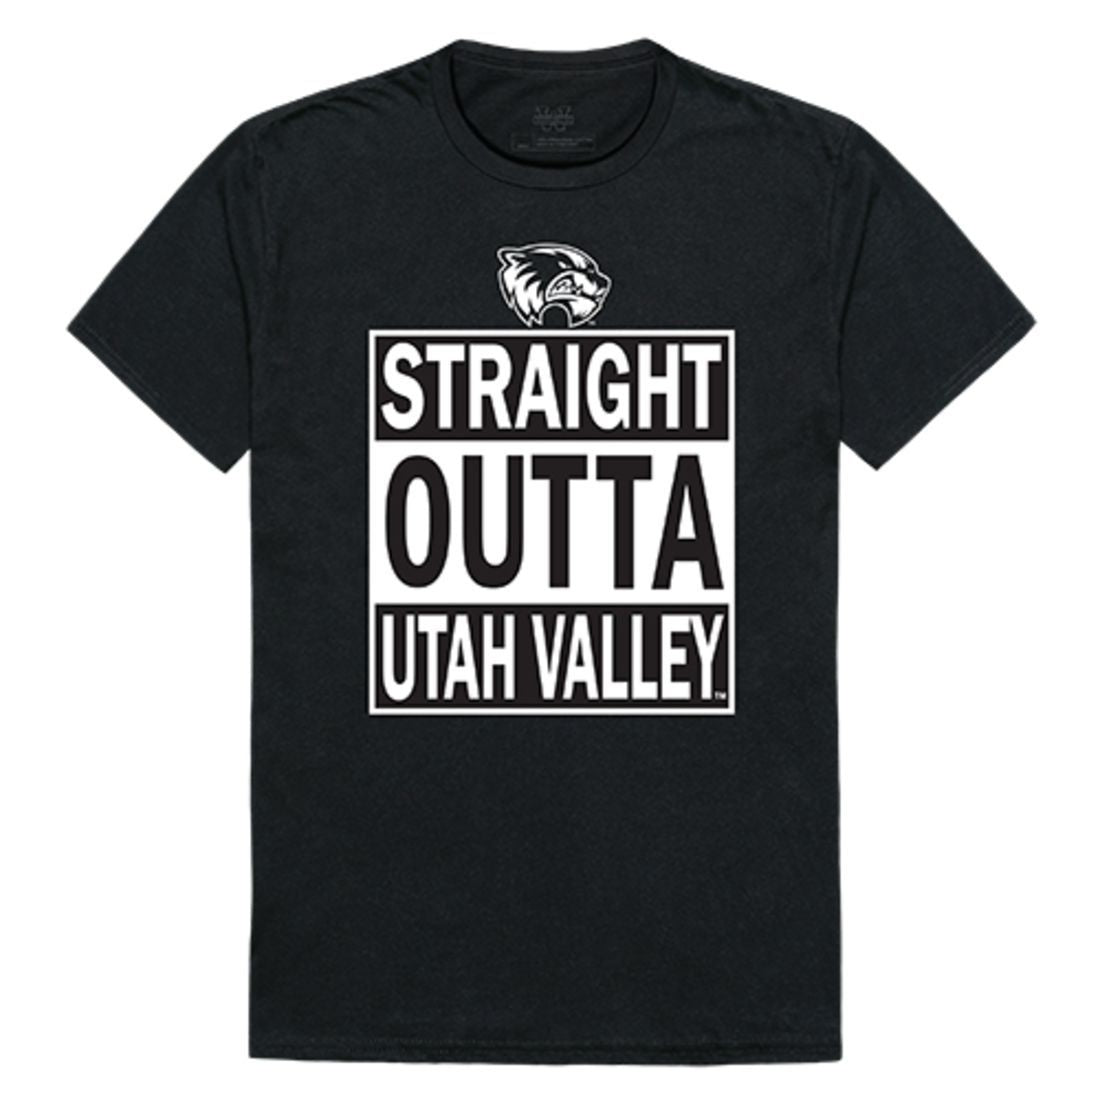 UVU Utah Valley University Wolverines Straight Outta T-Shirt Black-Campus-Wardrobe